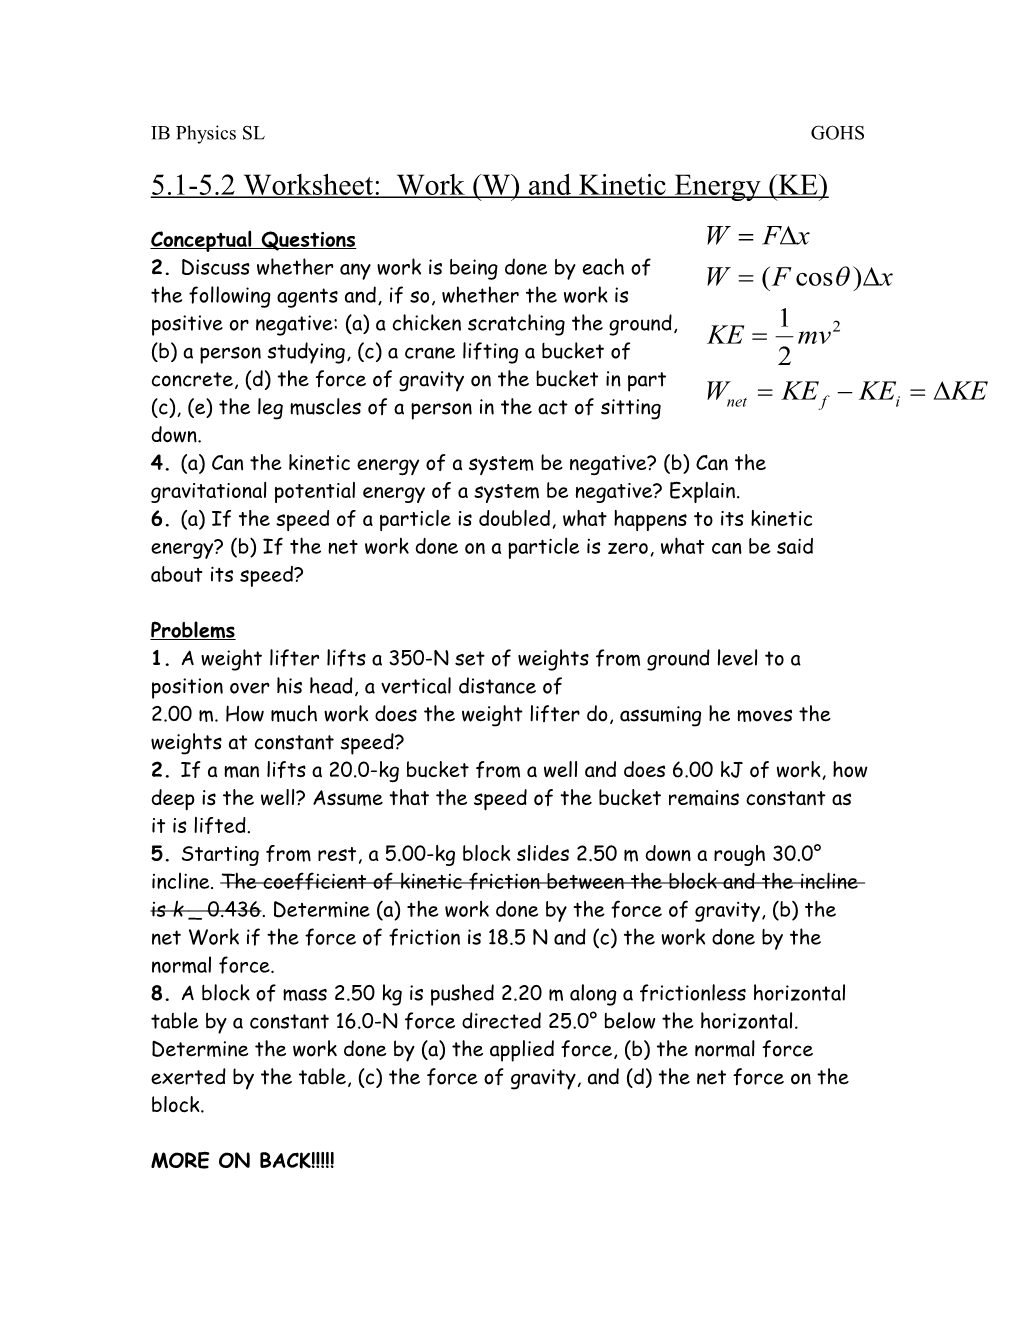 5.1-5.2 Worksheet: Work (W) and Kinetic Energy (KE)